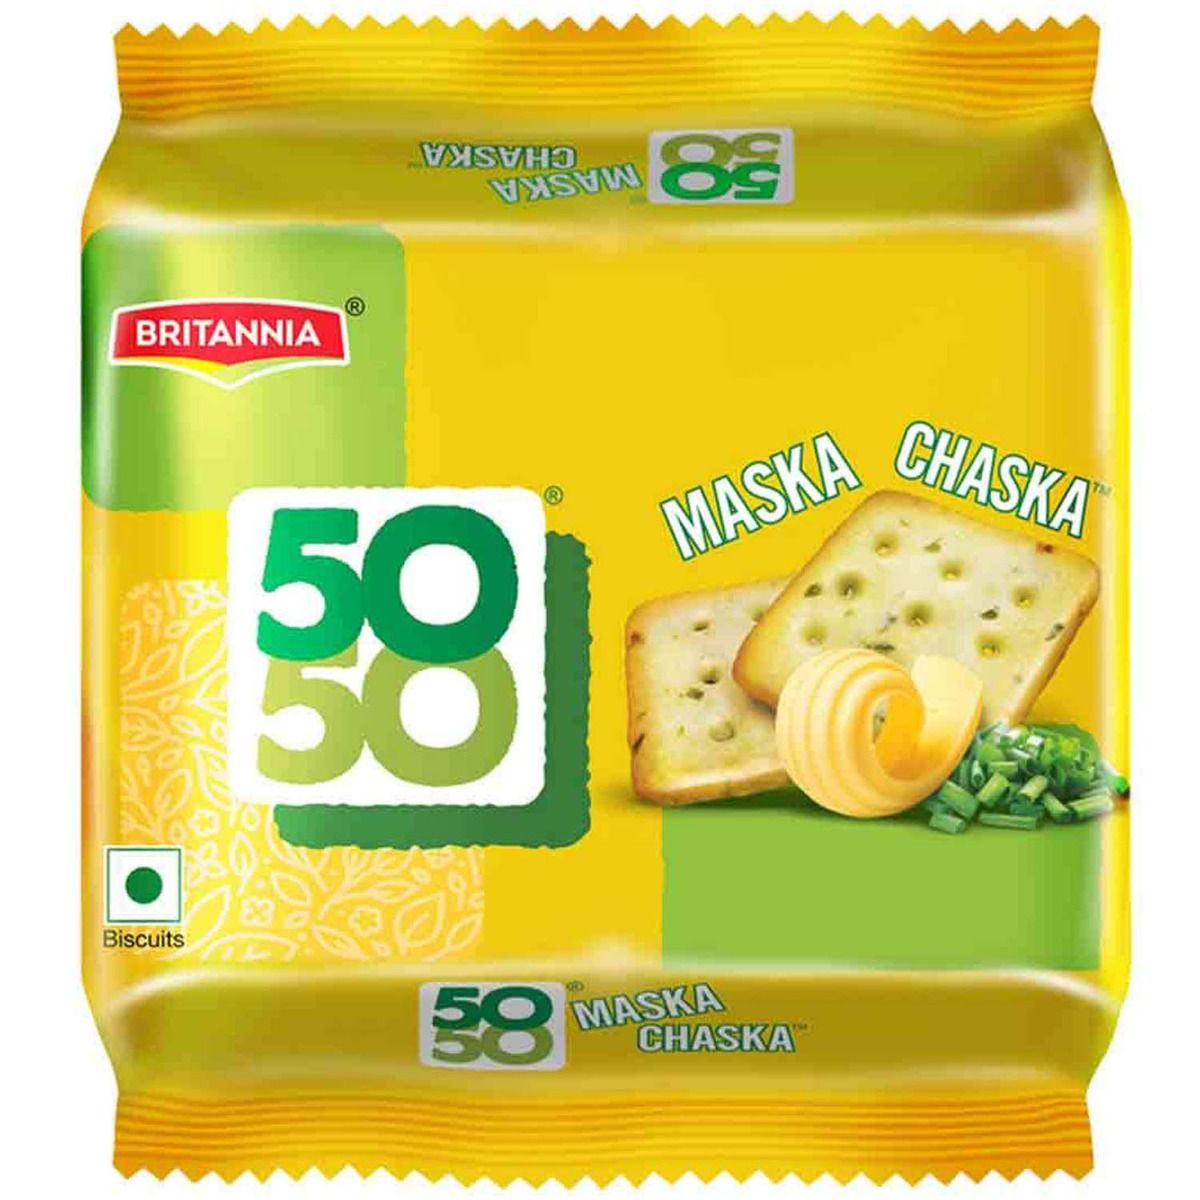 Britannia 50-50 Maska Chaska Biscuits, 120 gm, Pack of 1 